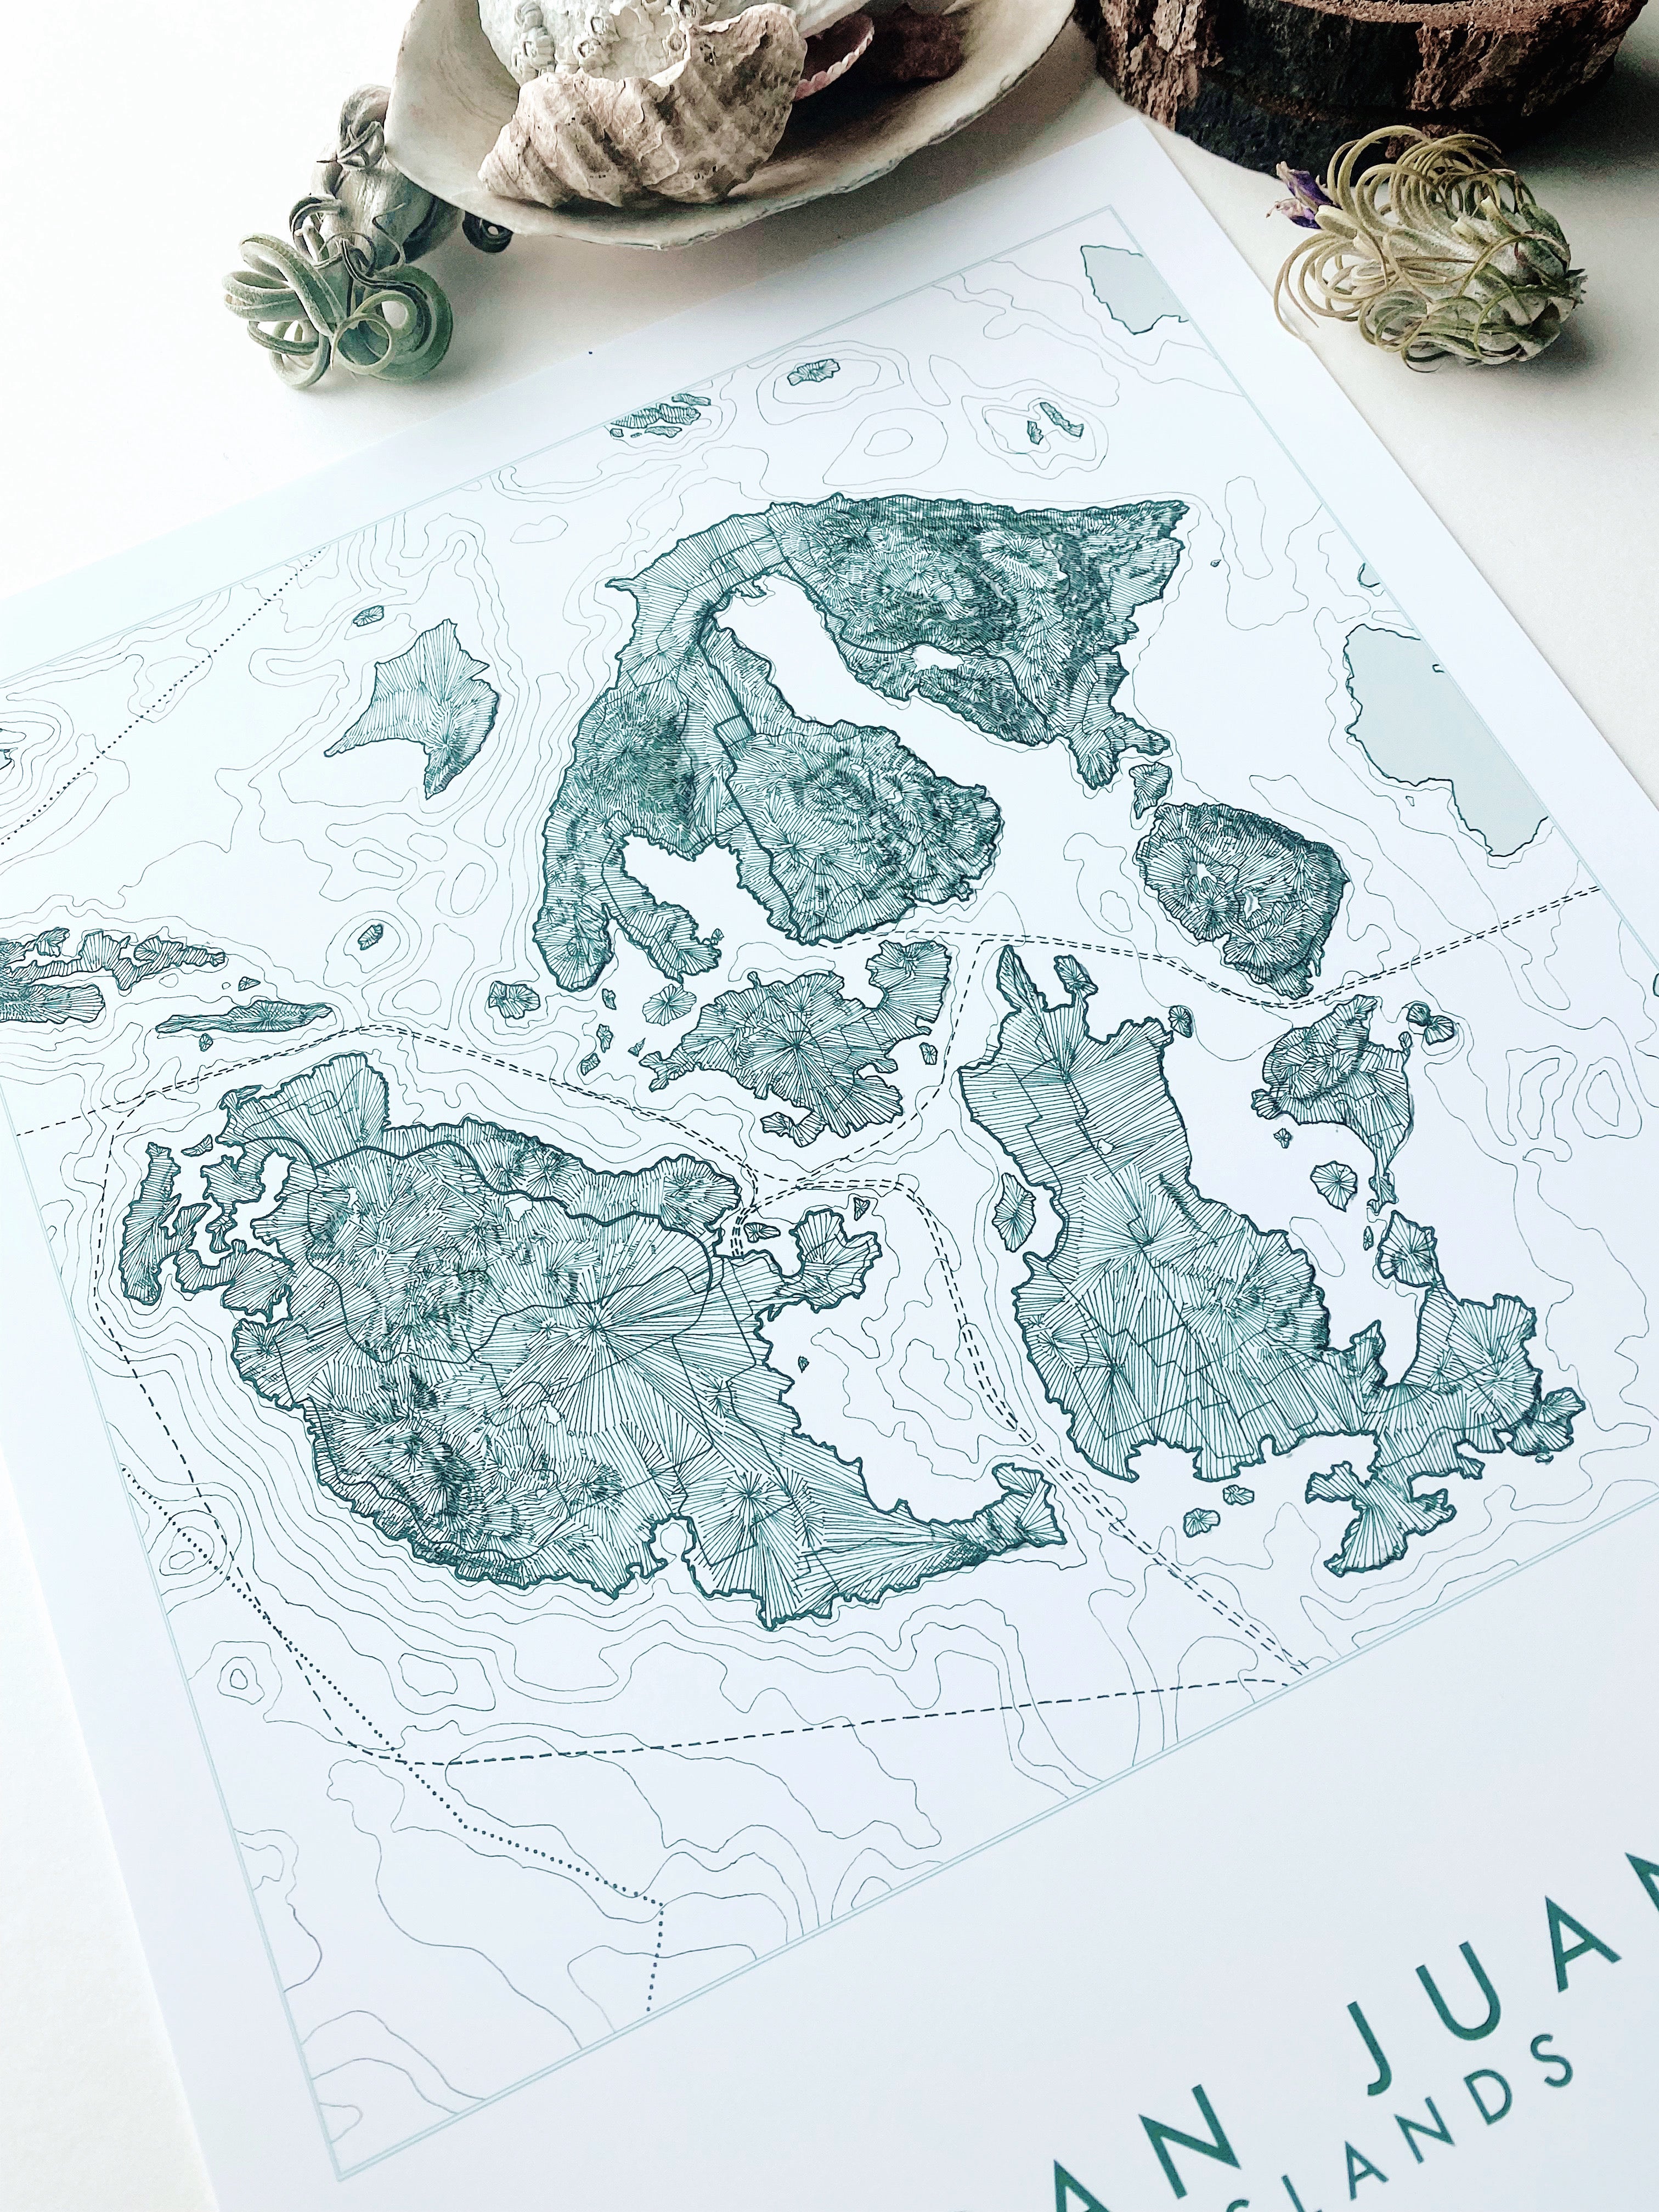 SAN JUAN Islands Land + Water Map Drawing: PRINT